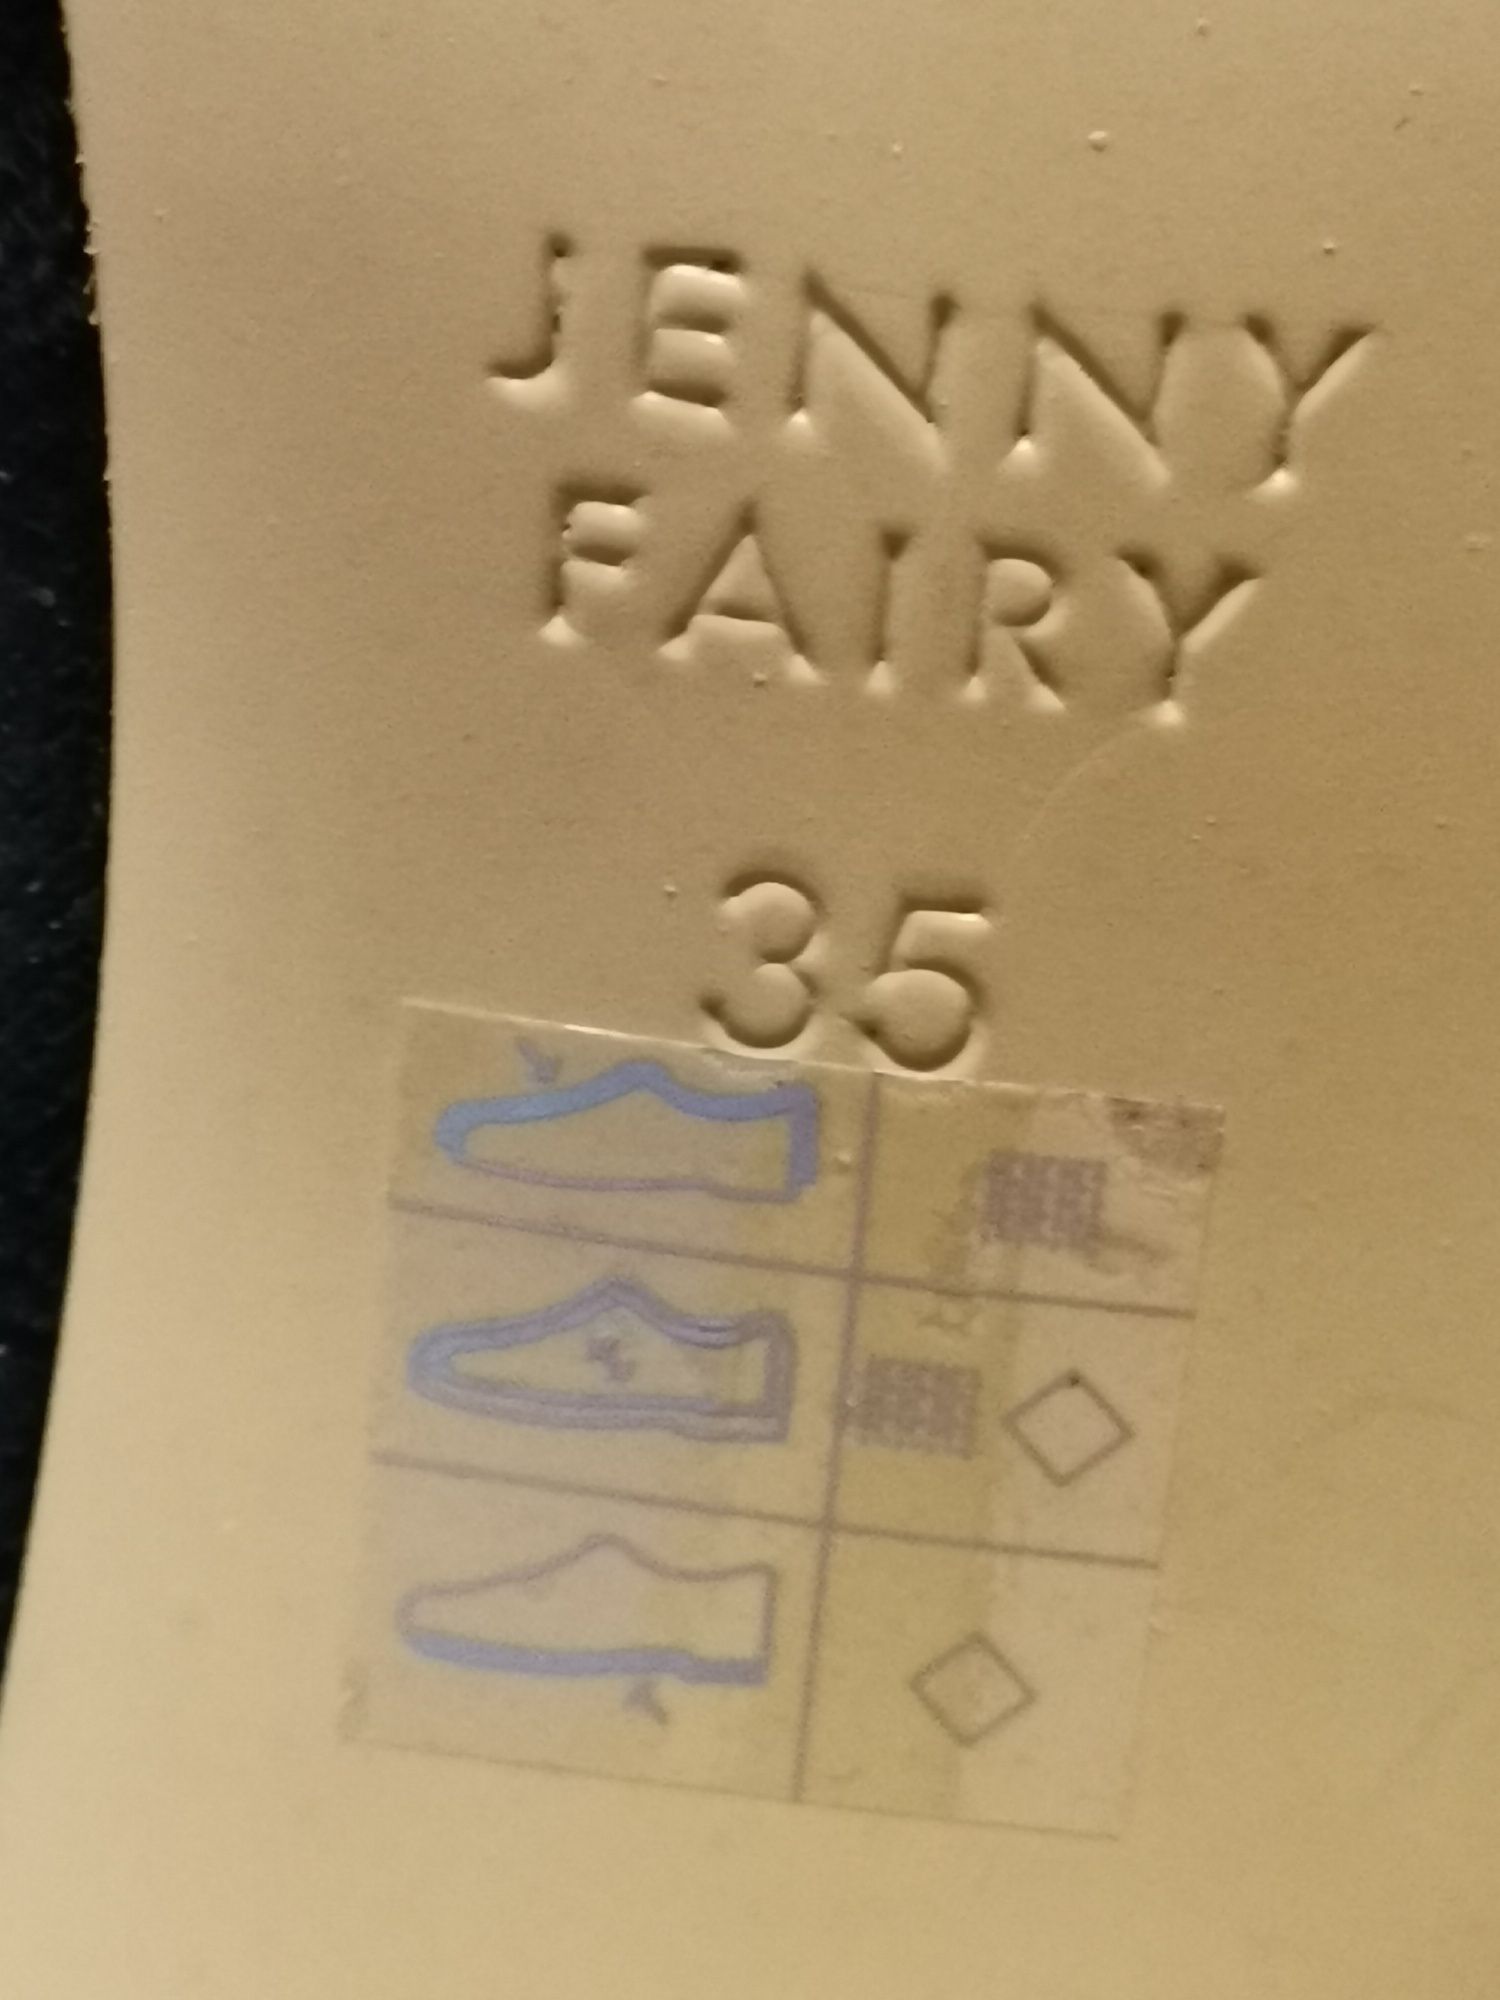 Cizme Jenny Fairy CCC, Nr. 35 Noi, doar probate, catifea - 120 LEI